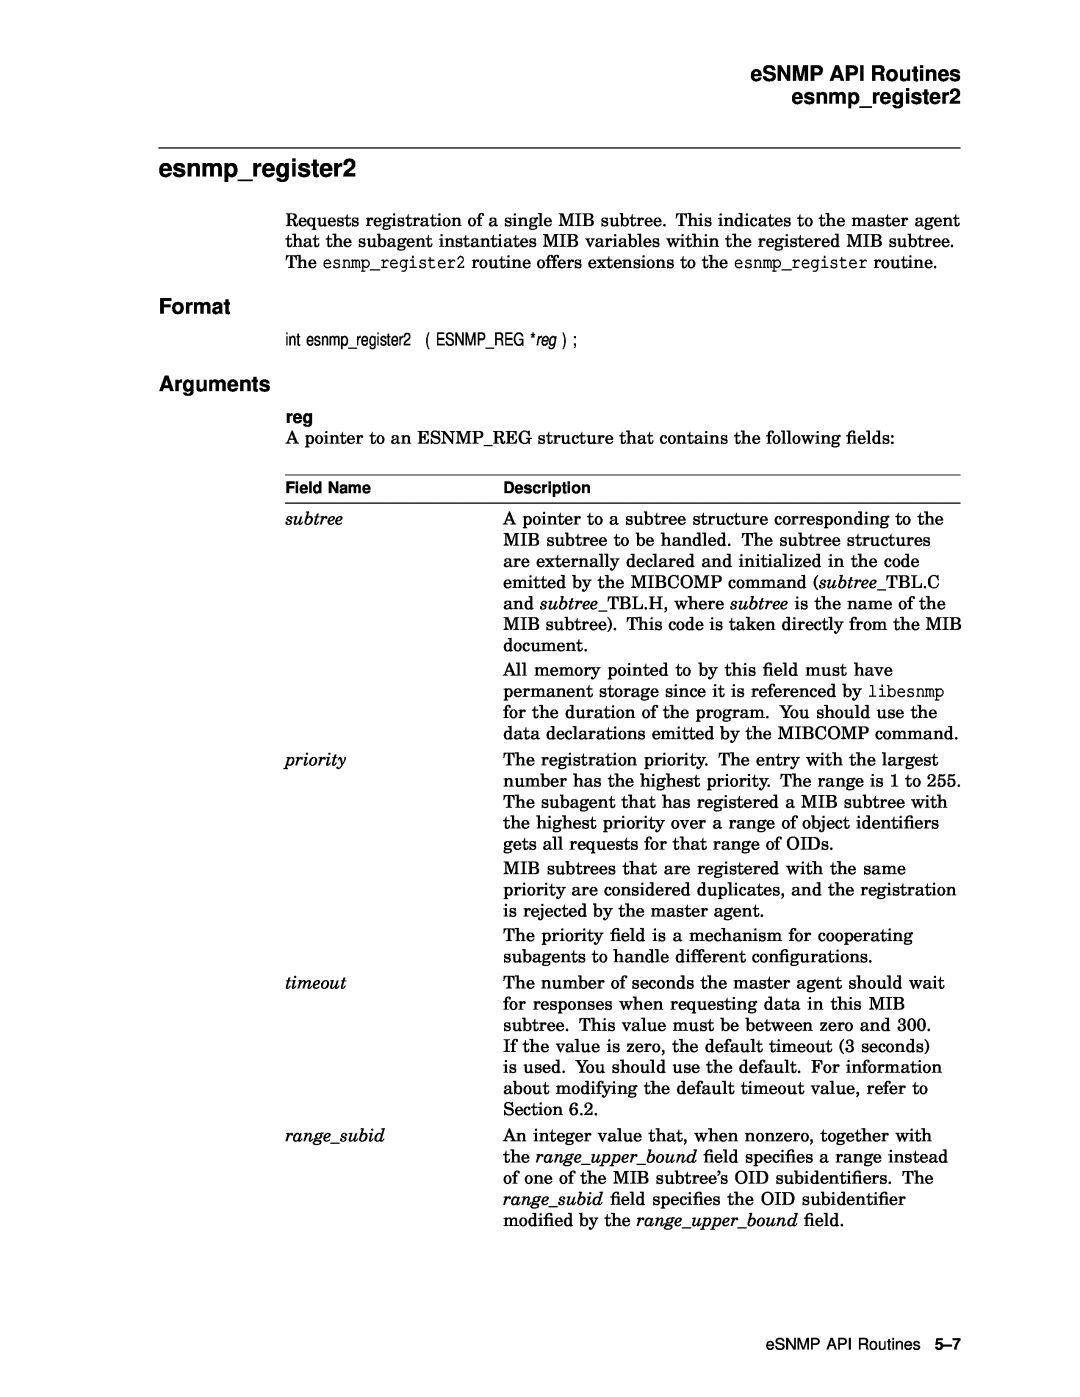 Compaq AAR04BCTE manual eSNMP API Routines esnmpregister2, Format, Arguments 